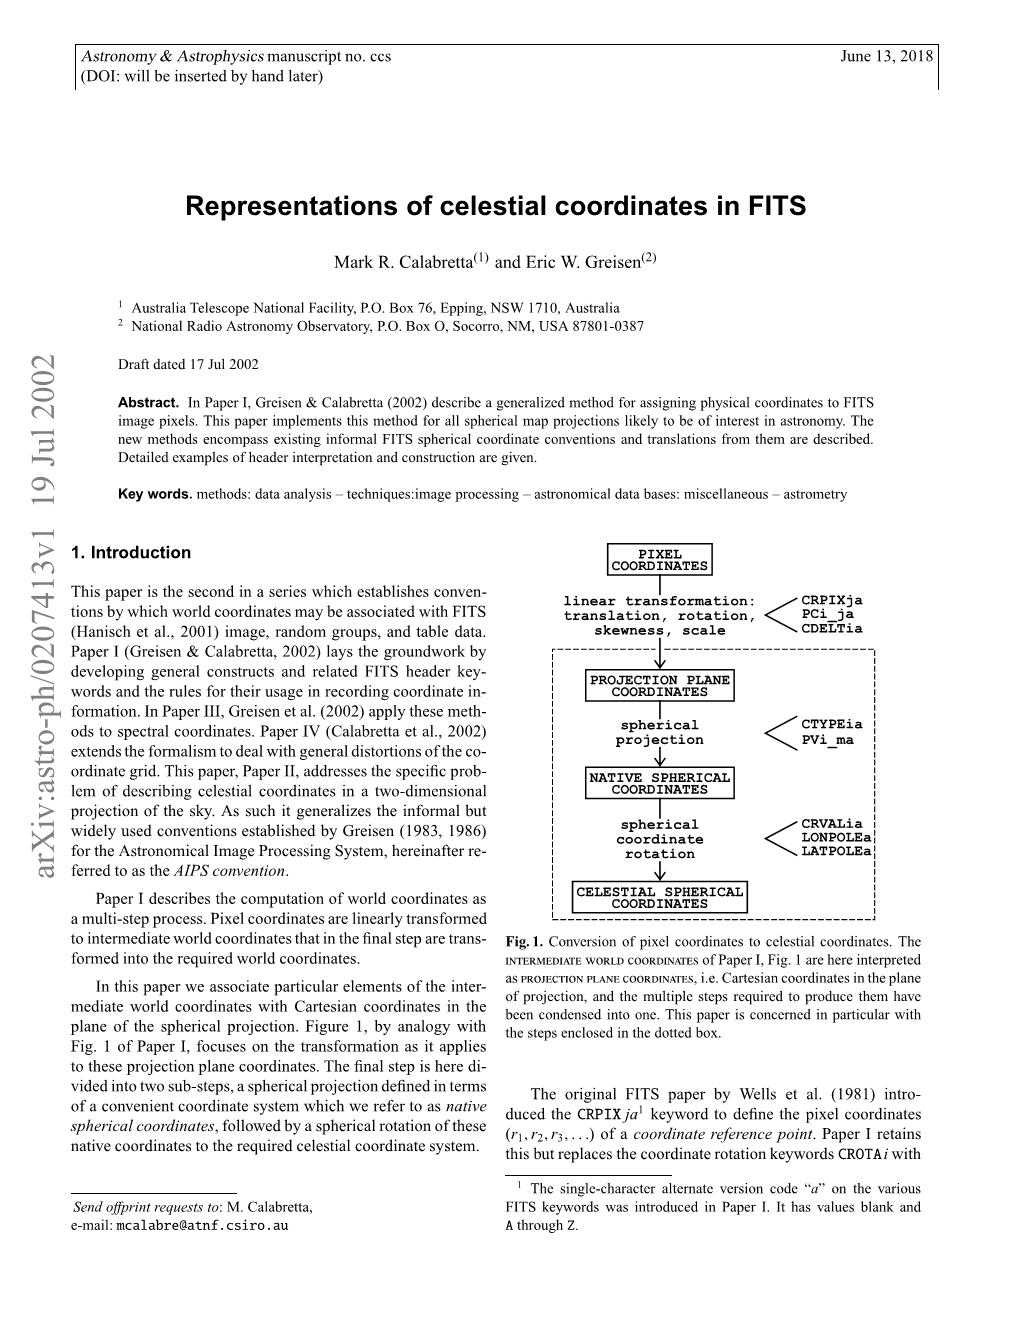 Representations of Celestial Coordinates in FITS a Linear Transformation Matrix